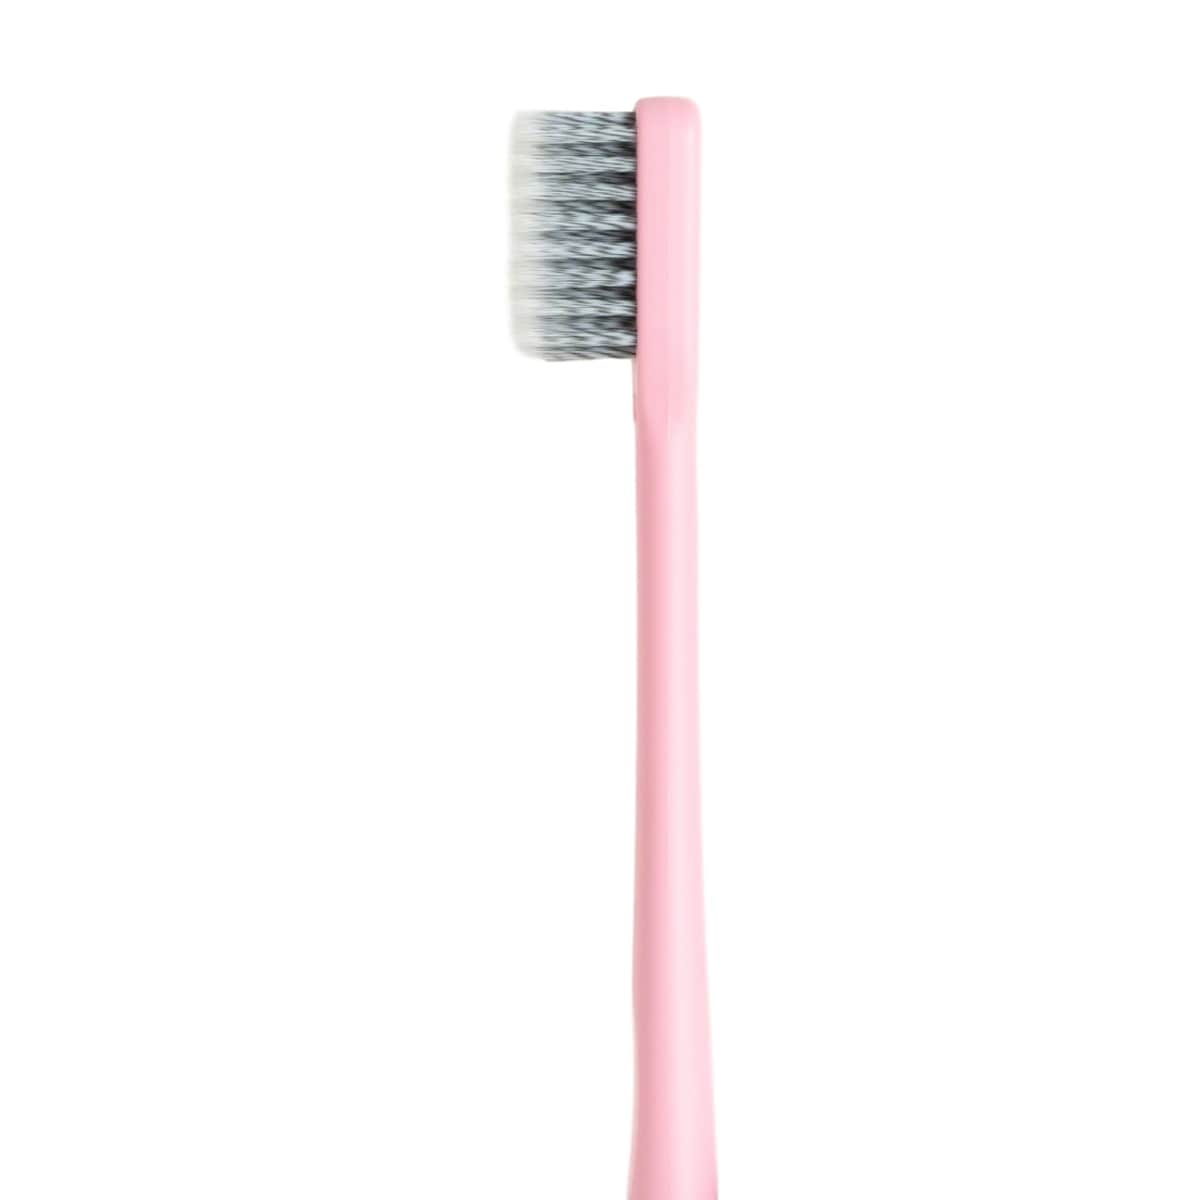 Keeko One Good Brush Biodegradable Toothbrush 1 Pack